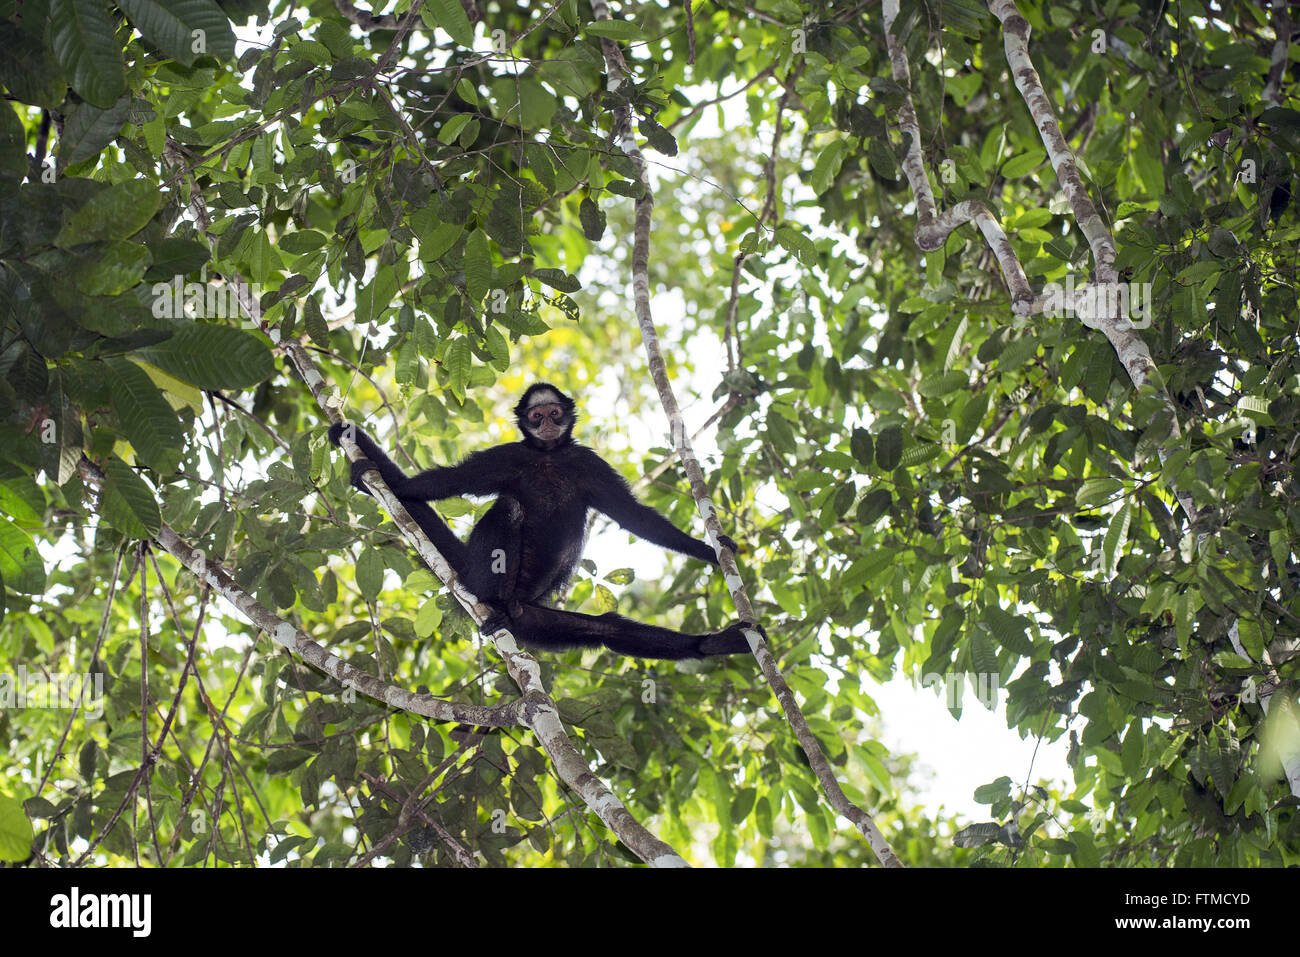 macaco aranha Stock Photo